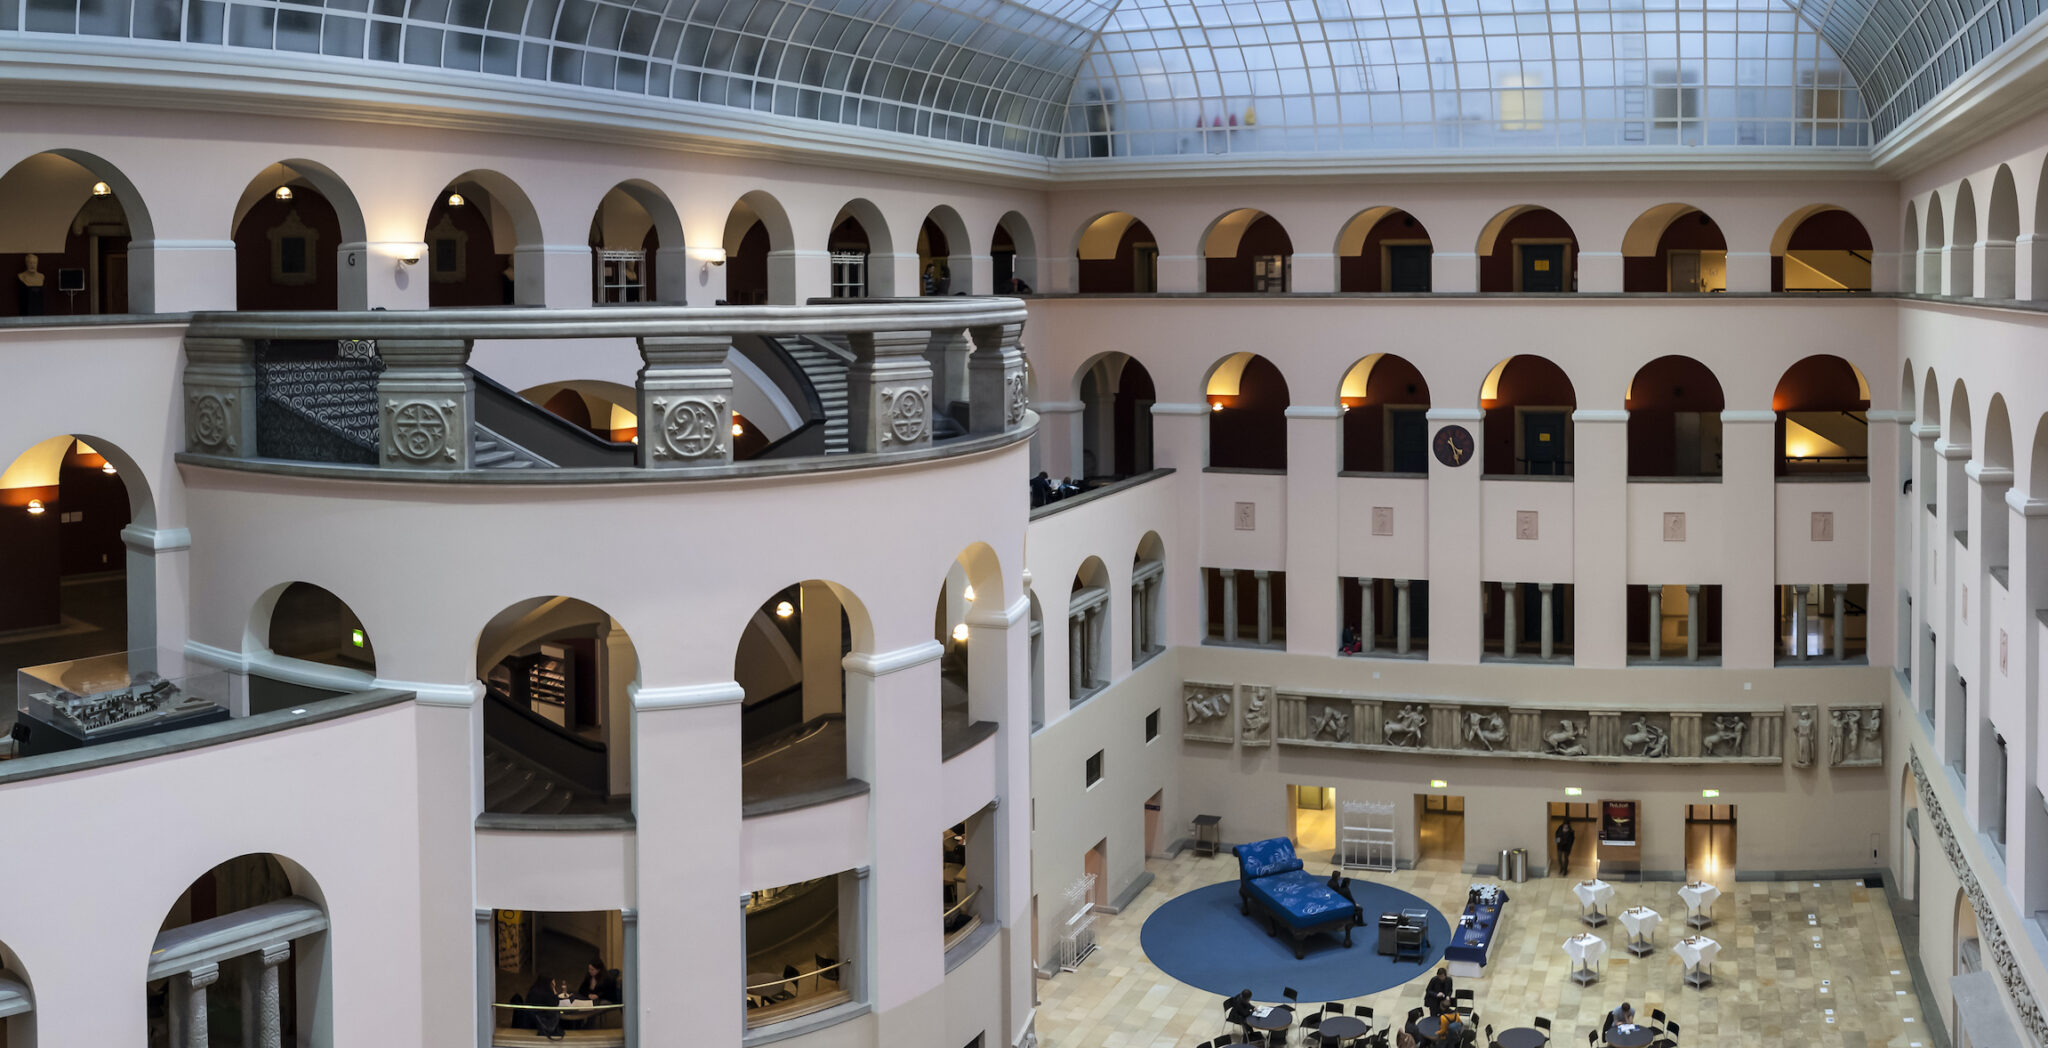 Atrium in the main building of the University of Zurich, Source: University of Zurich